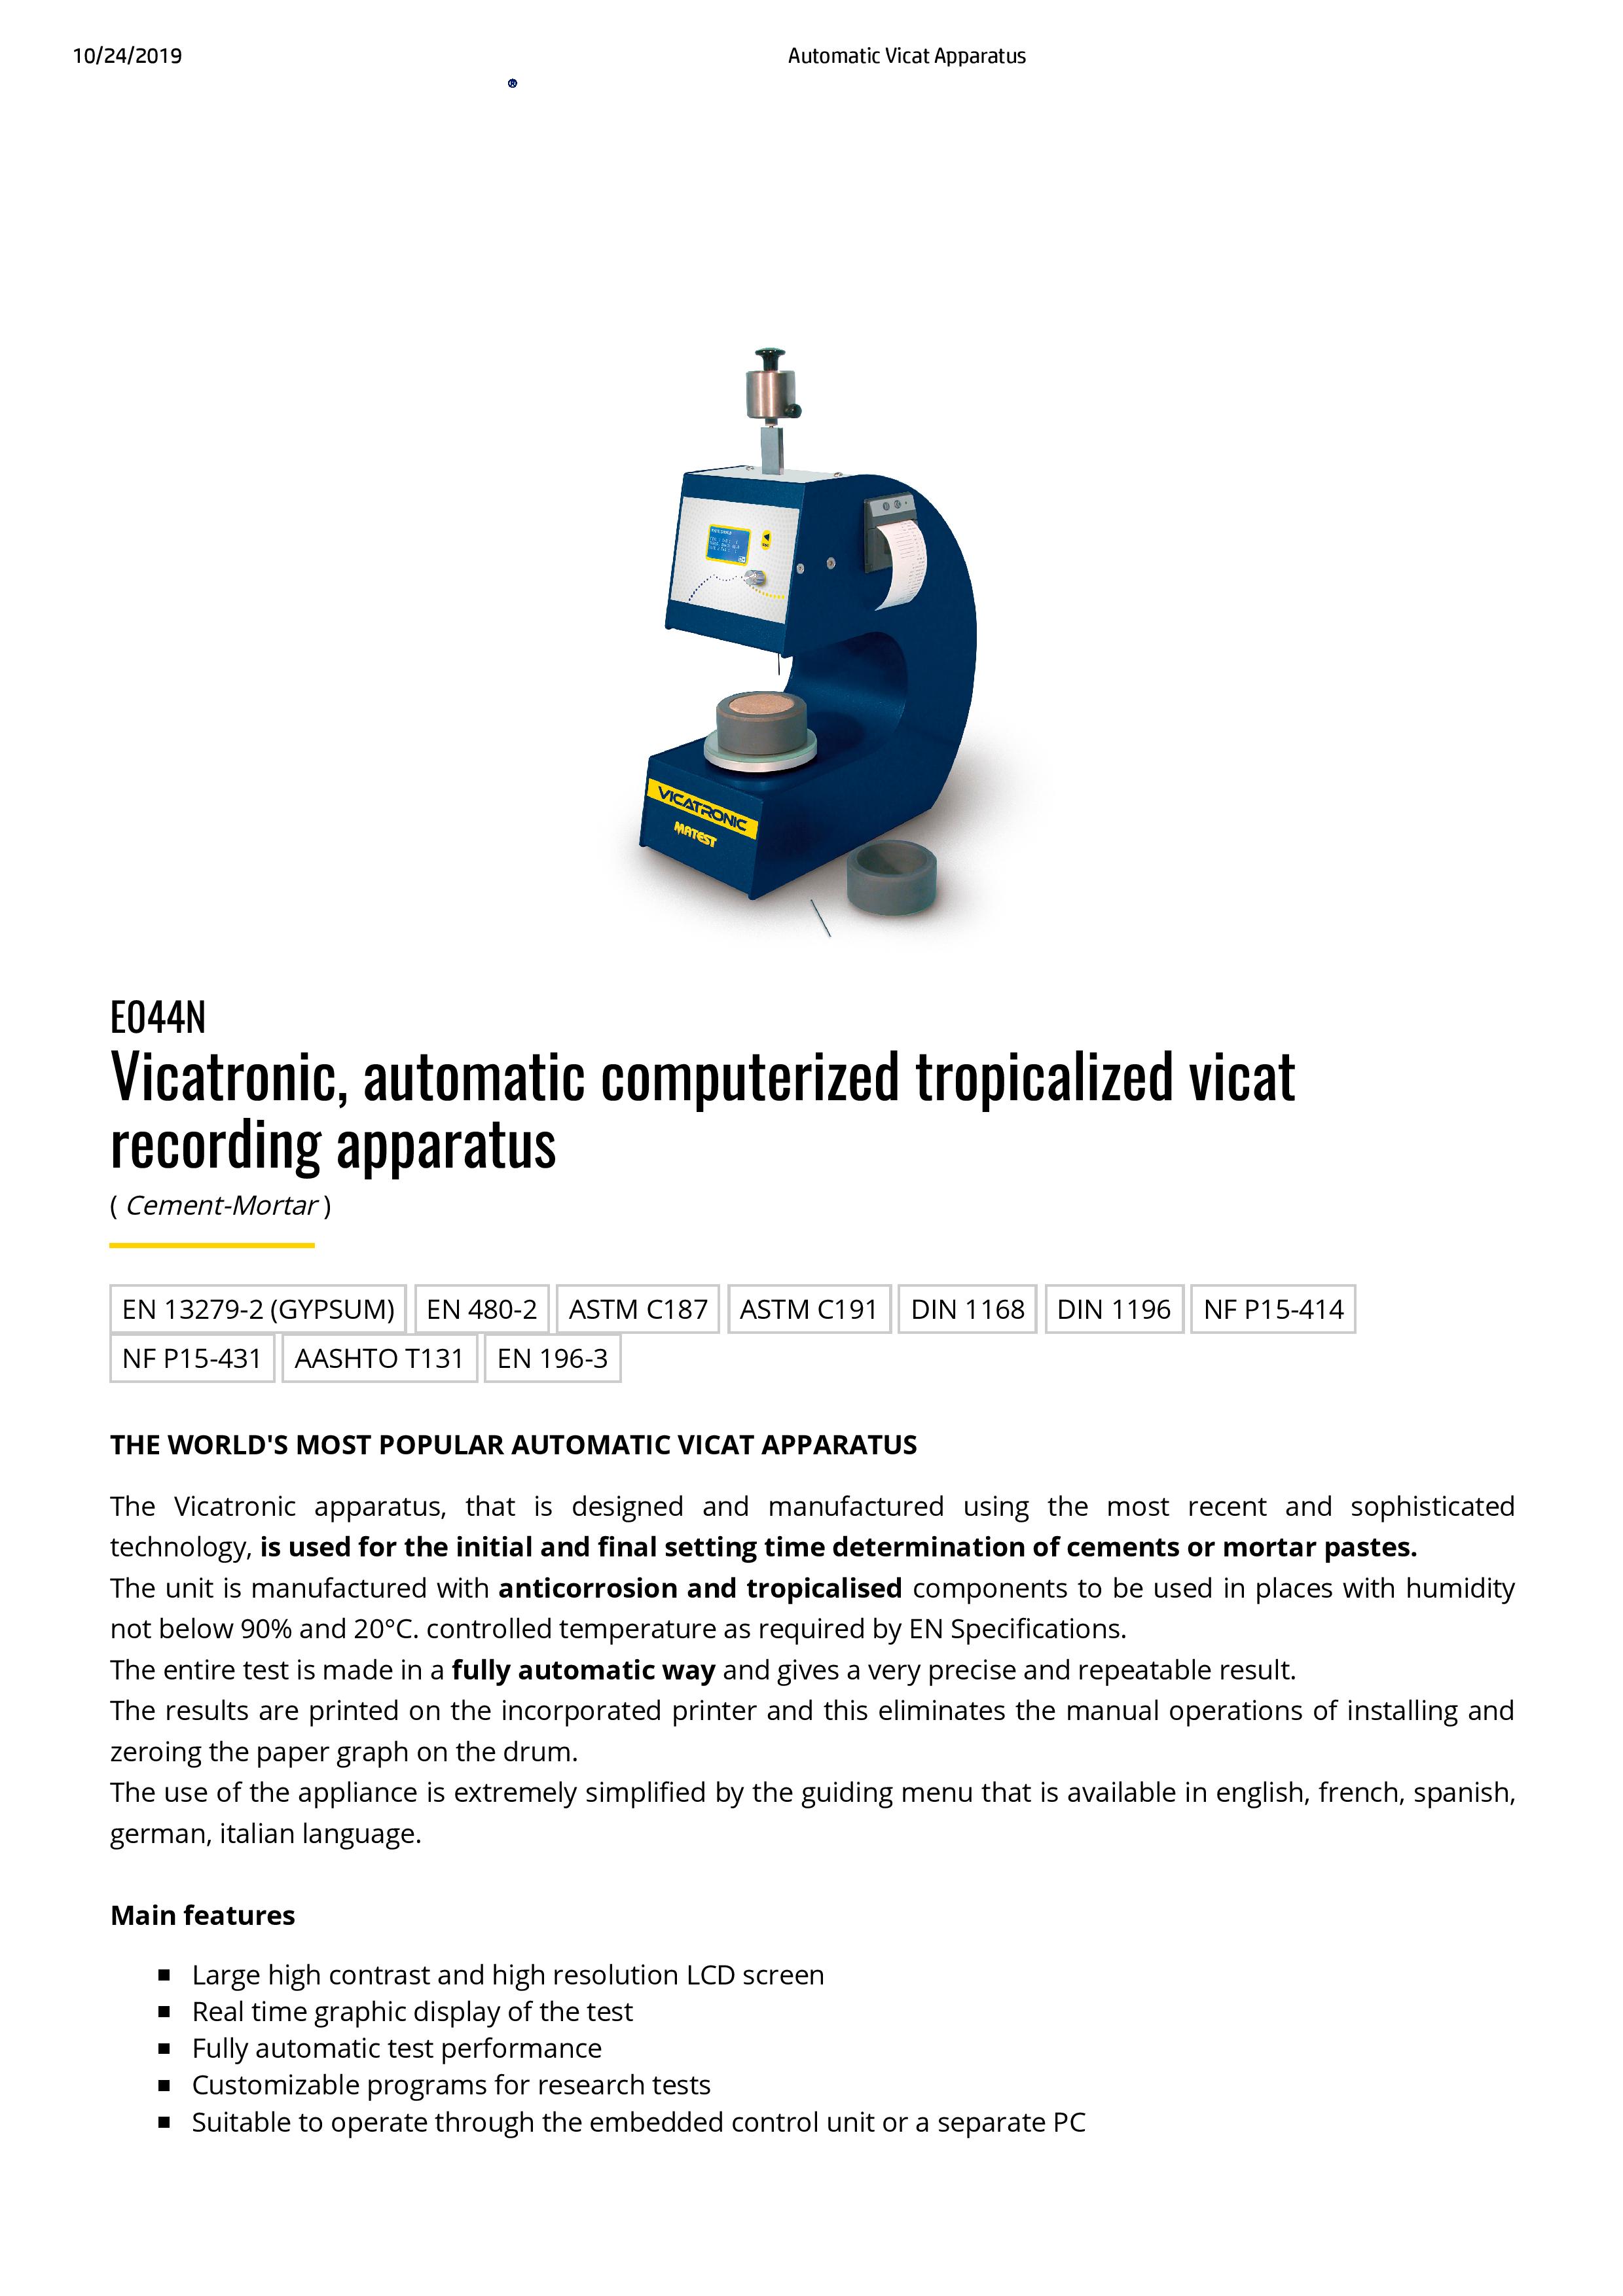 Vicatronic, Automatic vicat apparatus